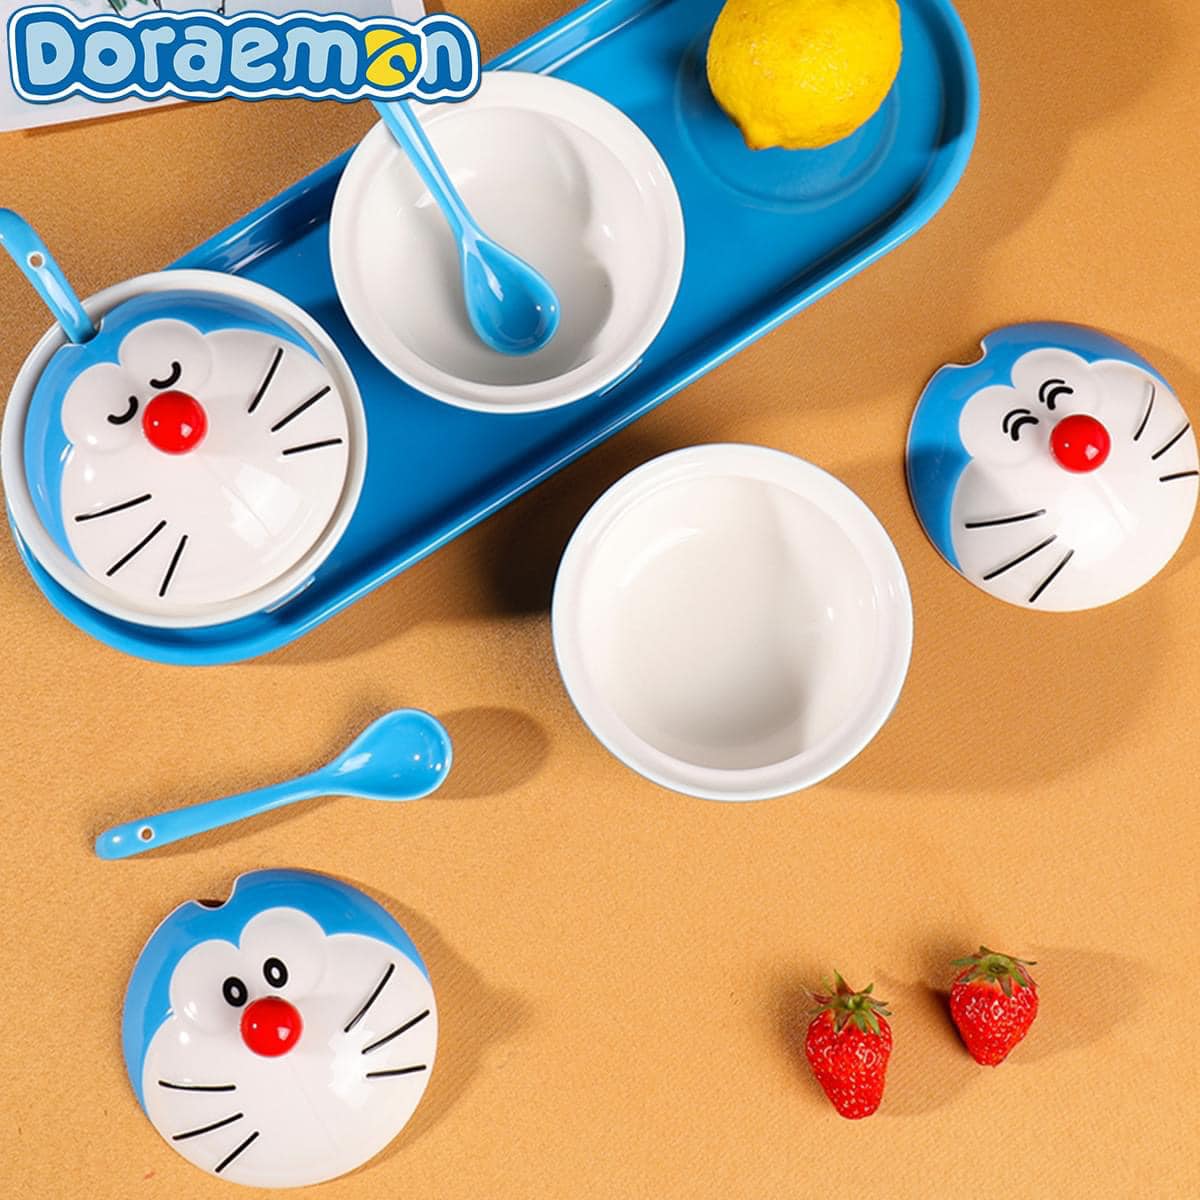 Seasoning 3in1 Set - Doraemon